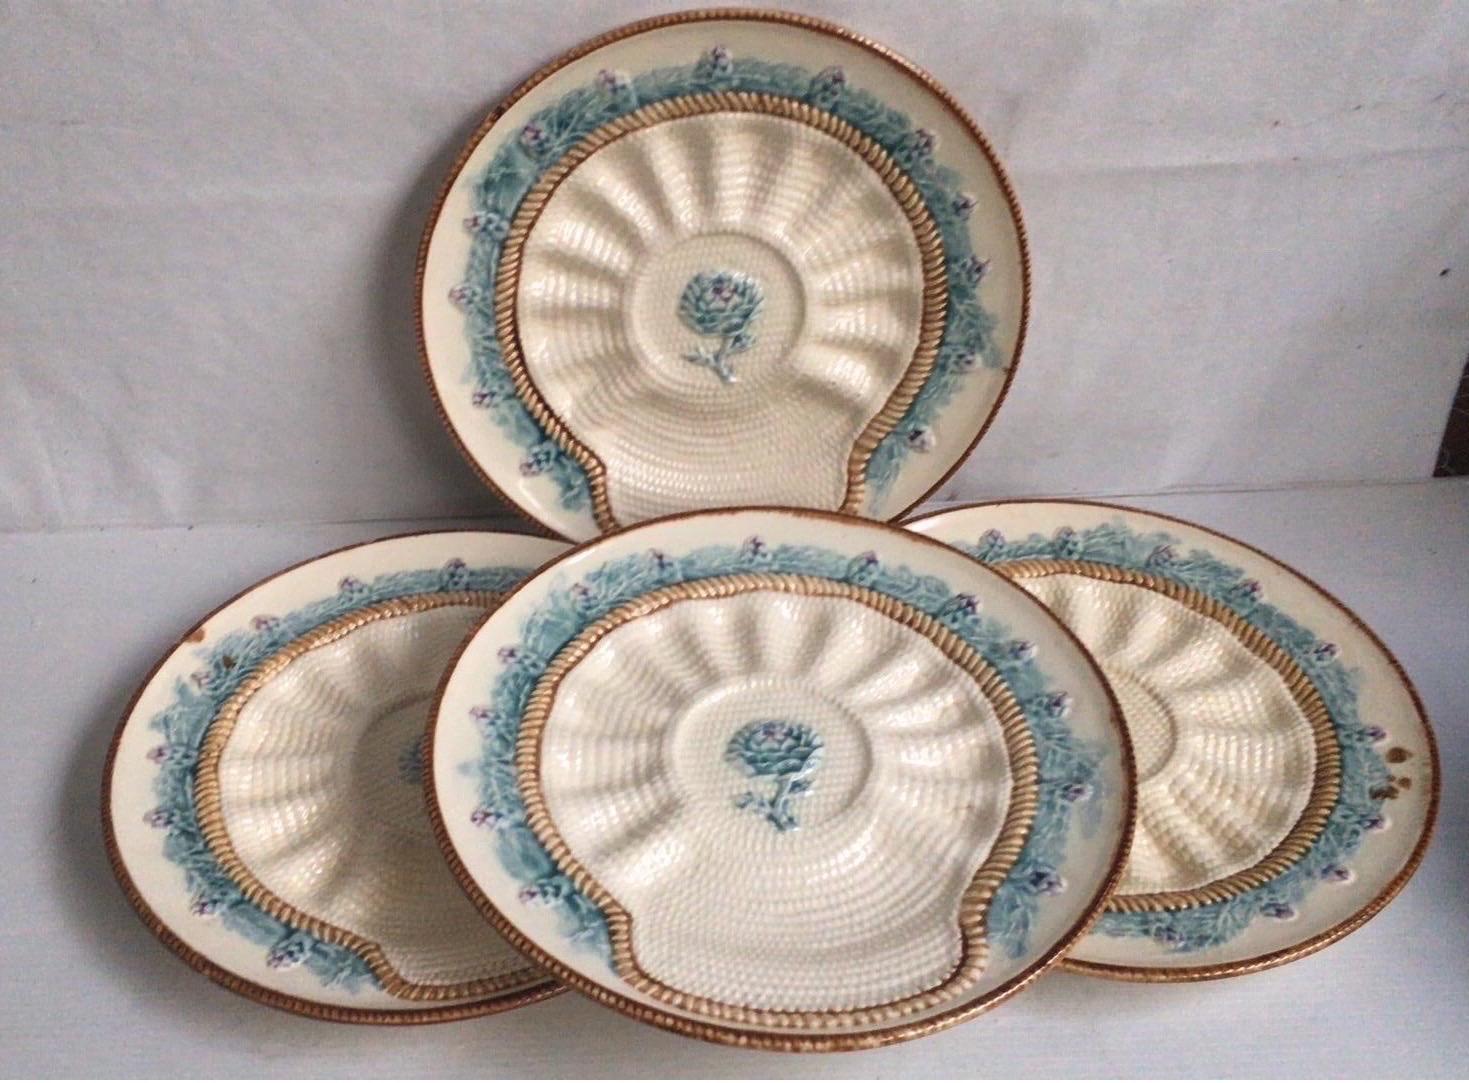 Rare French Majolica artichoke plate signed Longchamp, circa 1890.
4 plates are available.